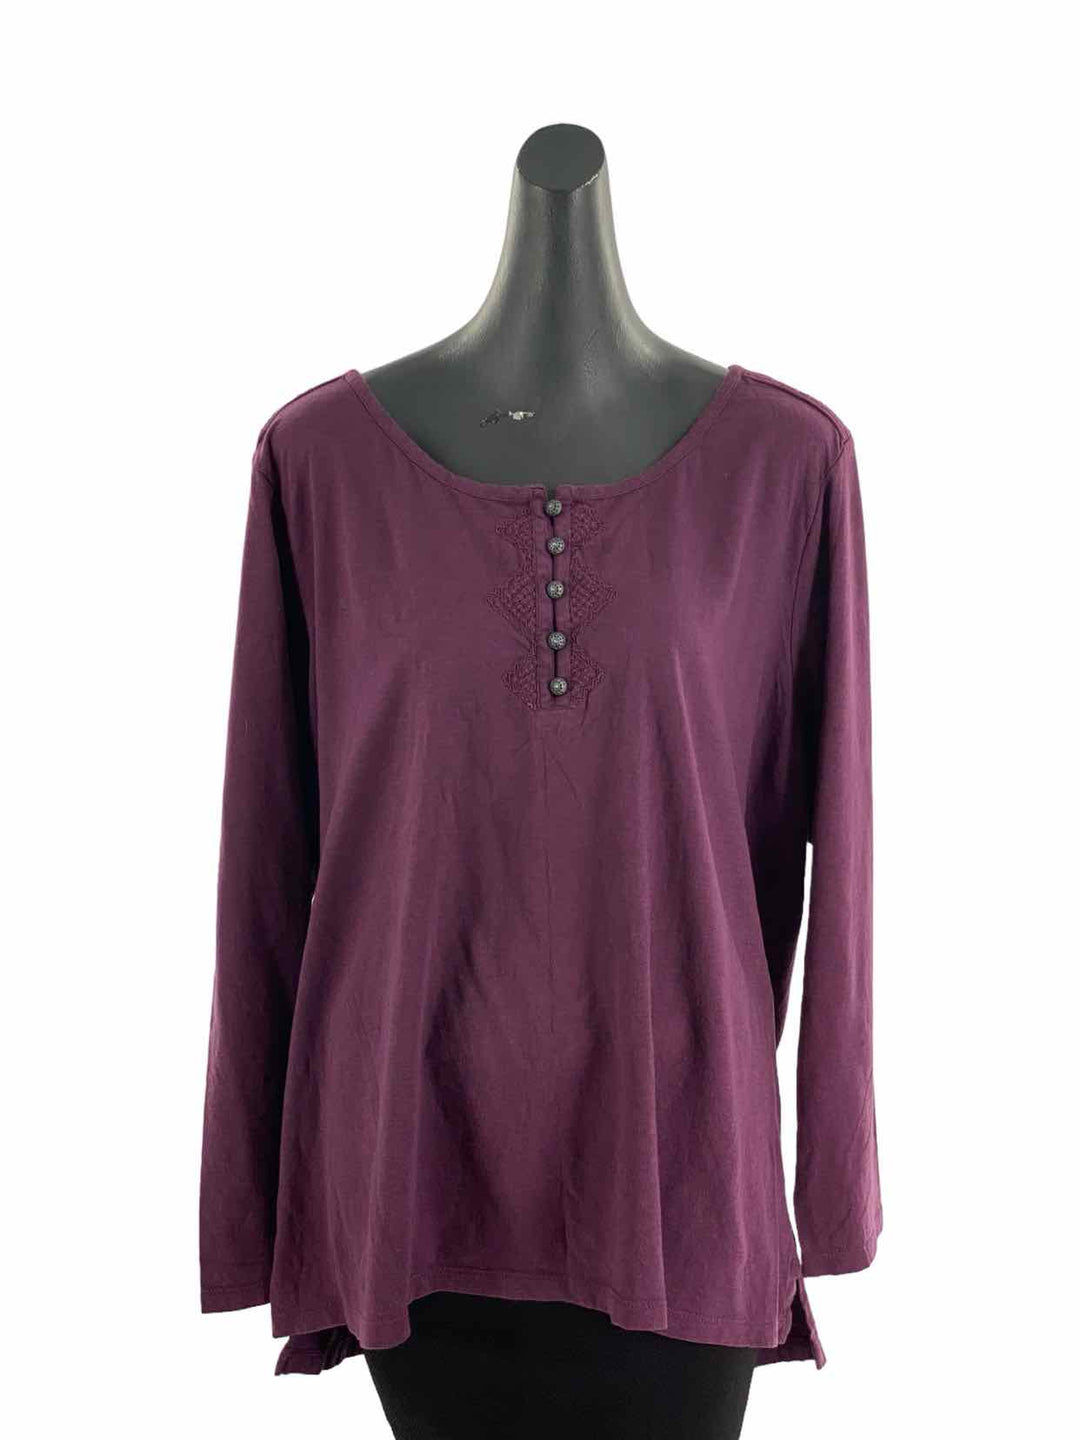 J Jill Size 3X Purple Long Sleeve Shirts